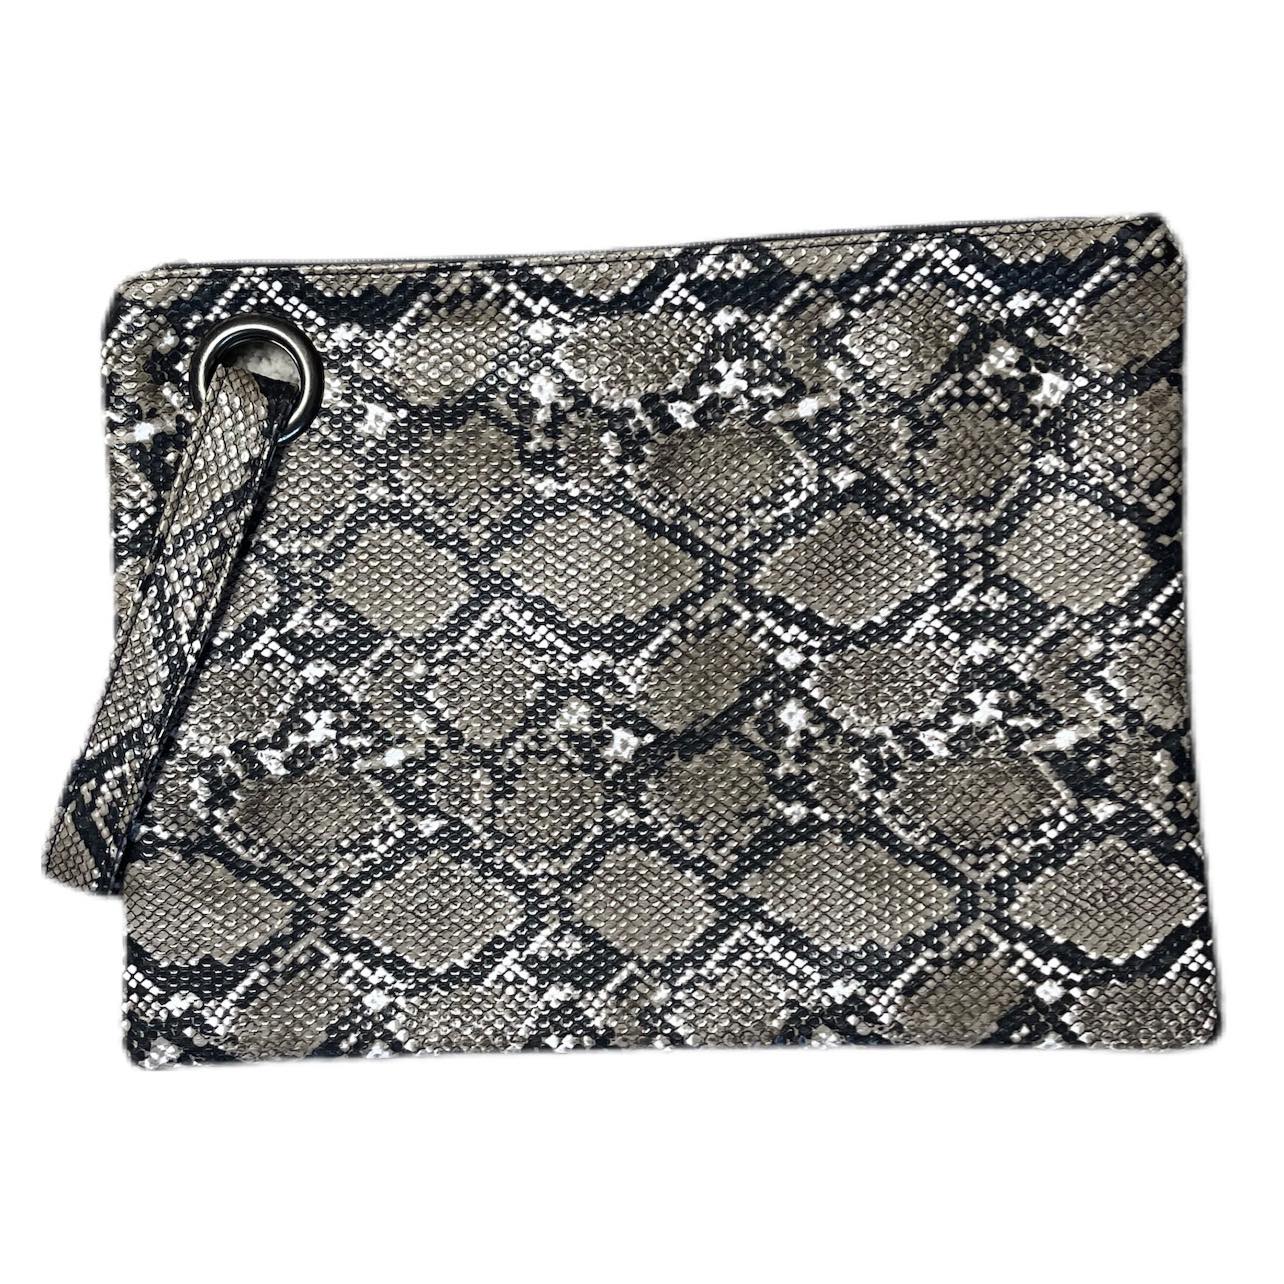 Susan Vegan Leather Handbag-Clutch - Snake